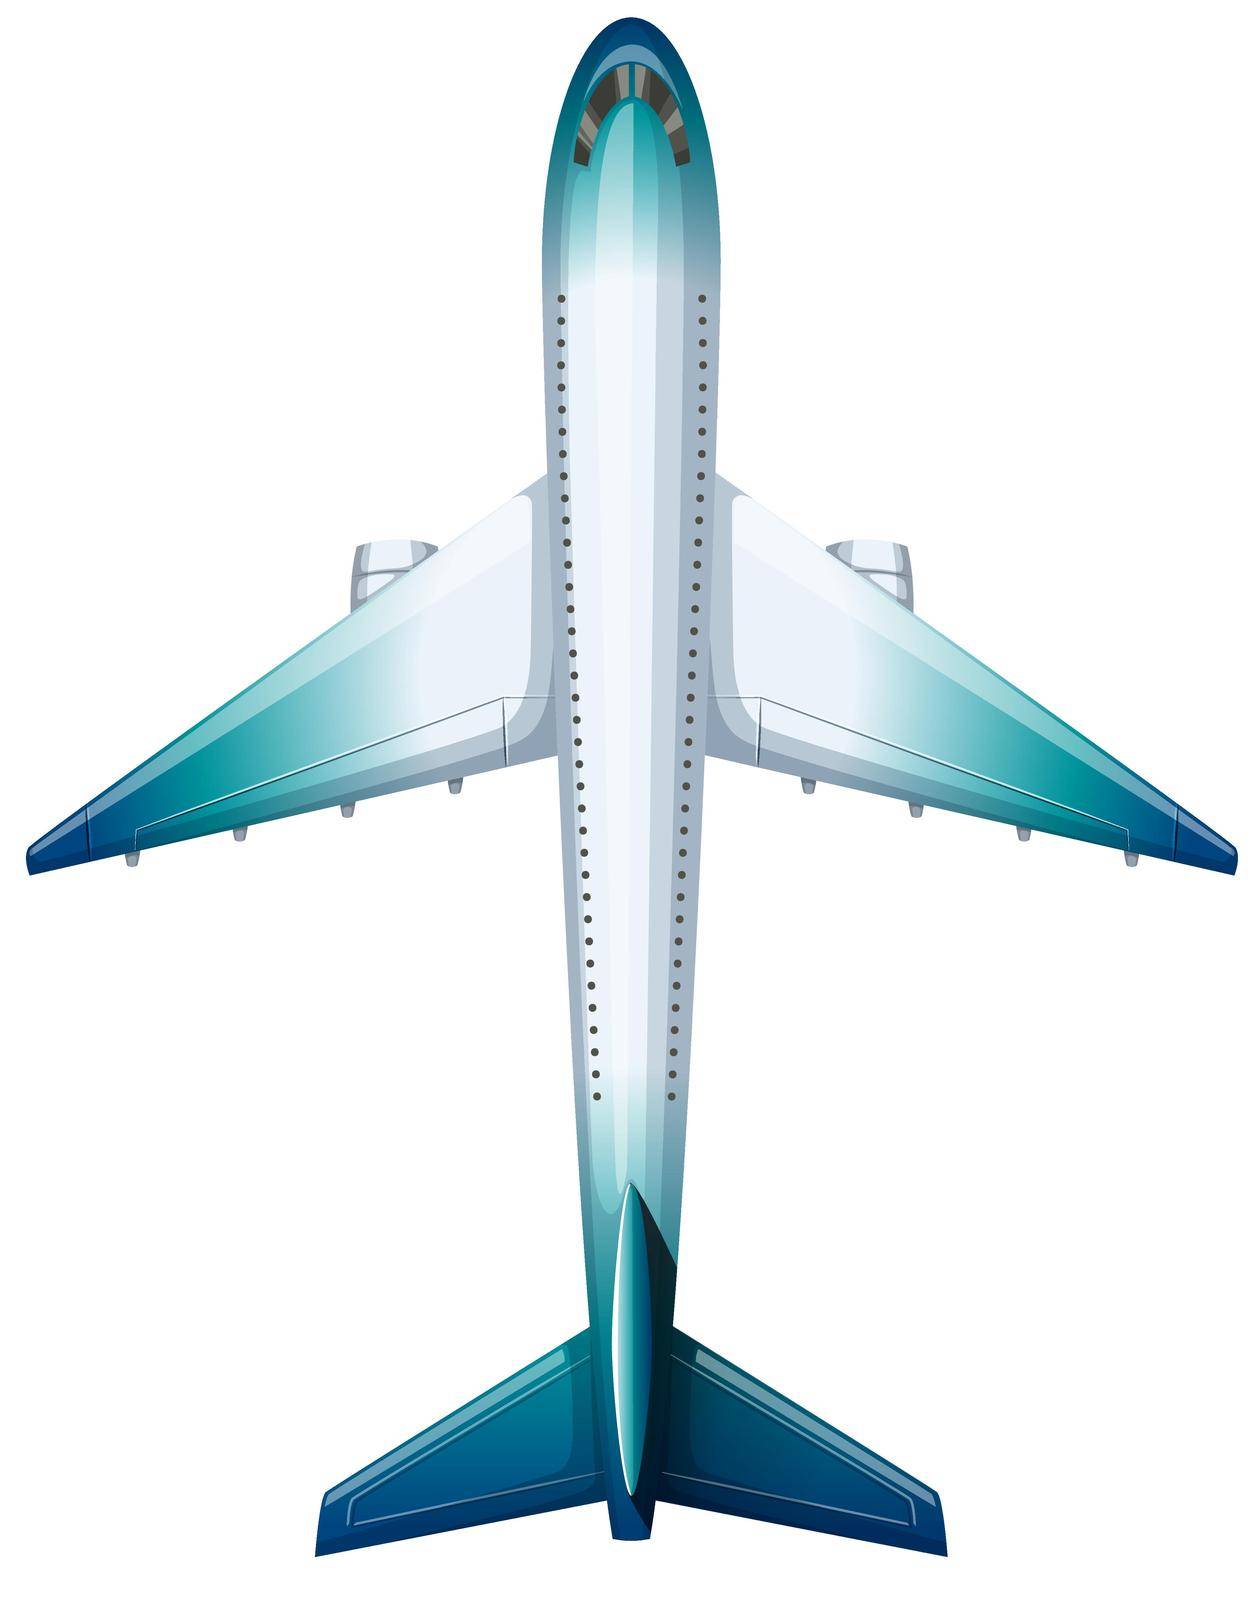 Modern design of aeroplane by iimages